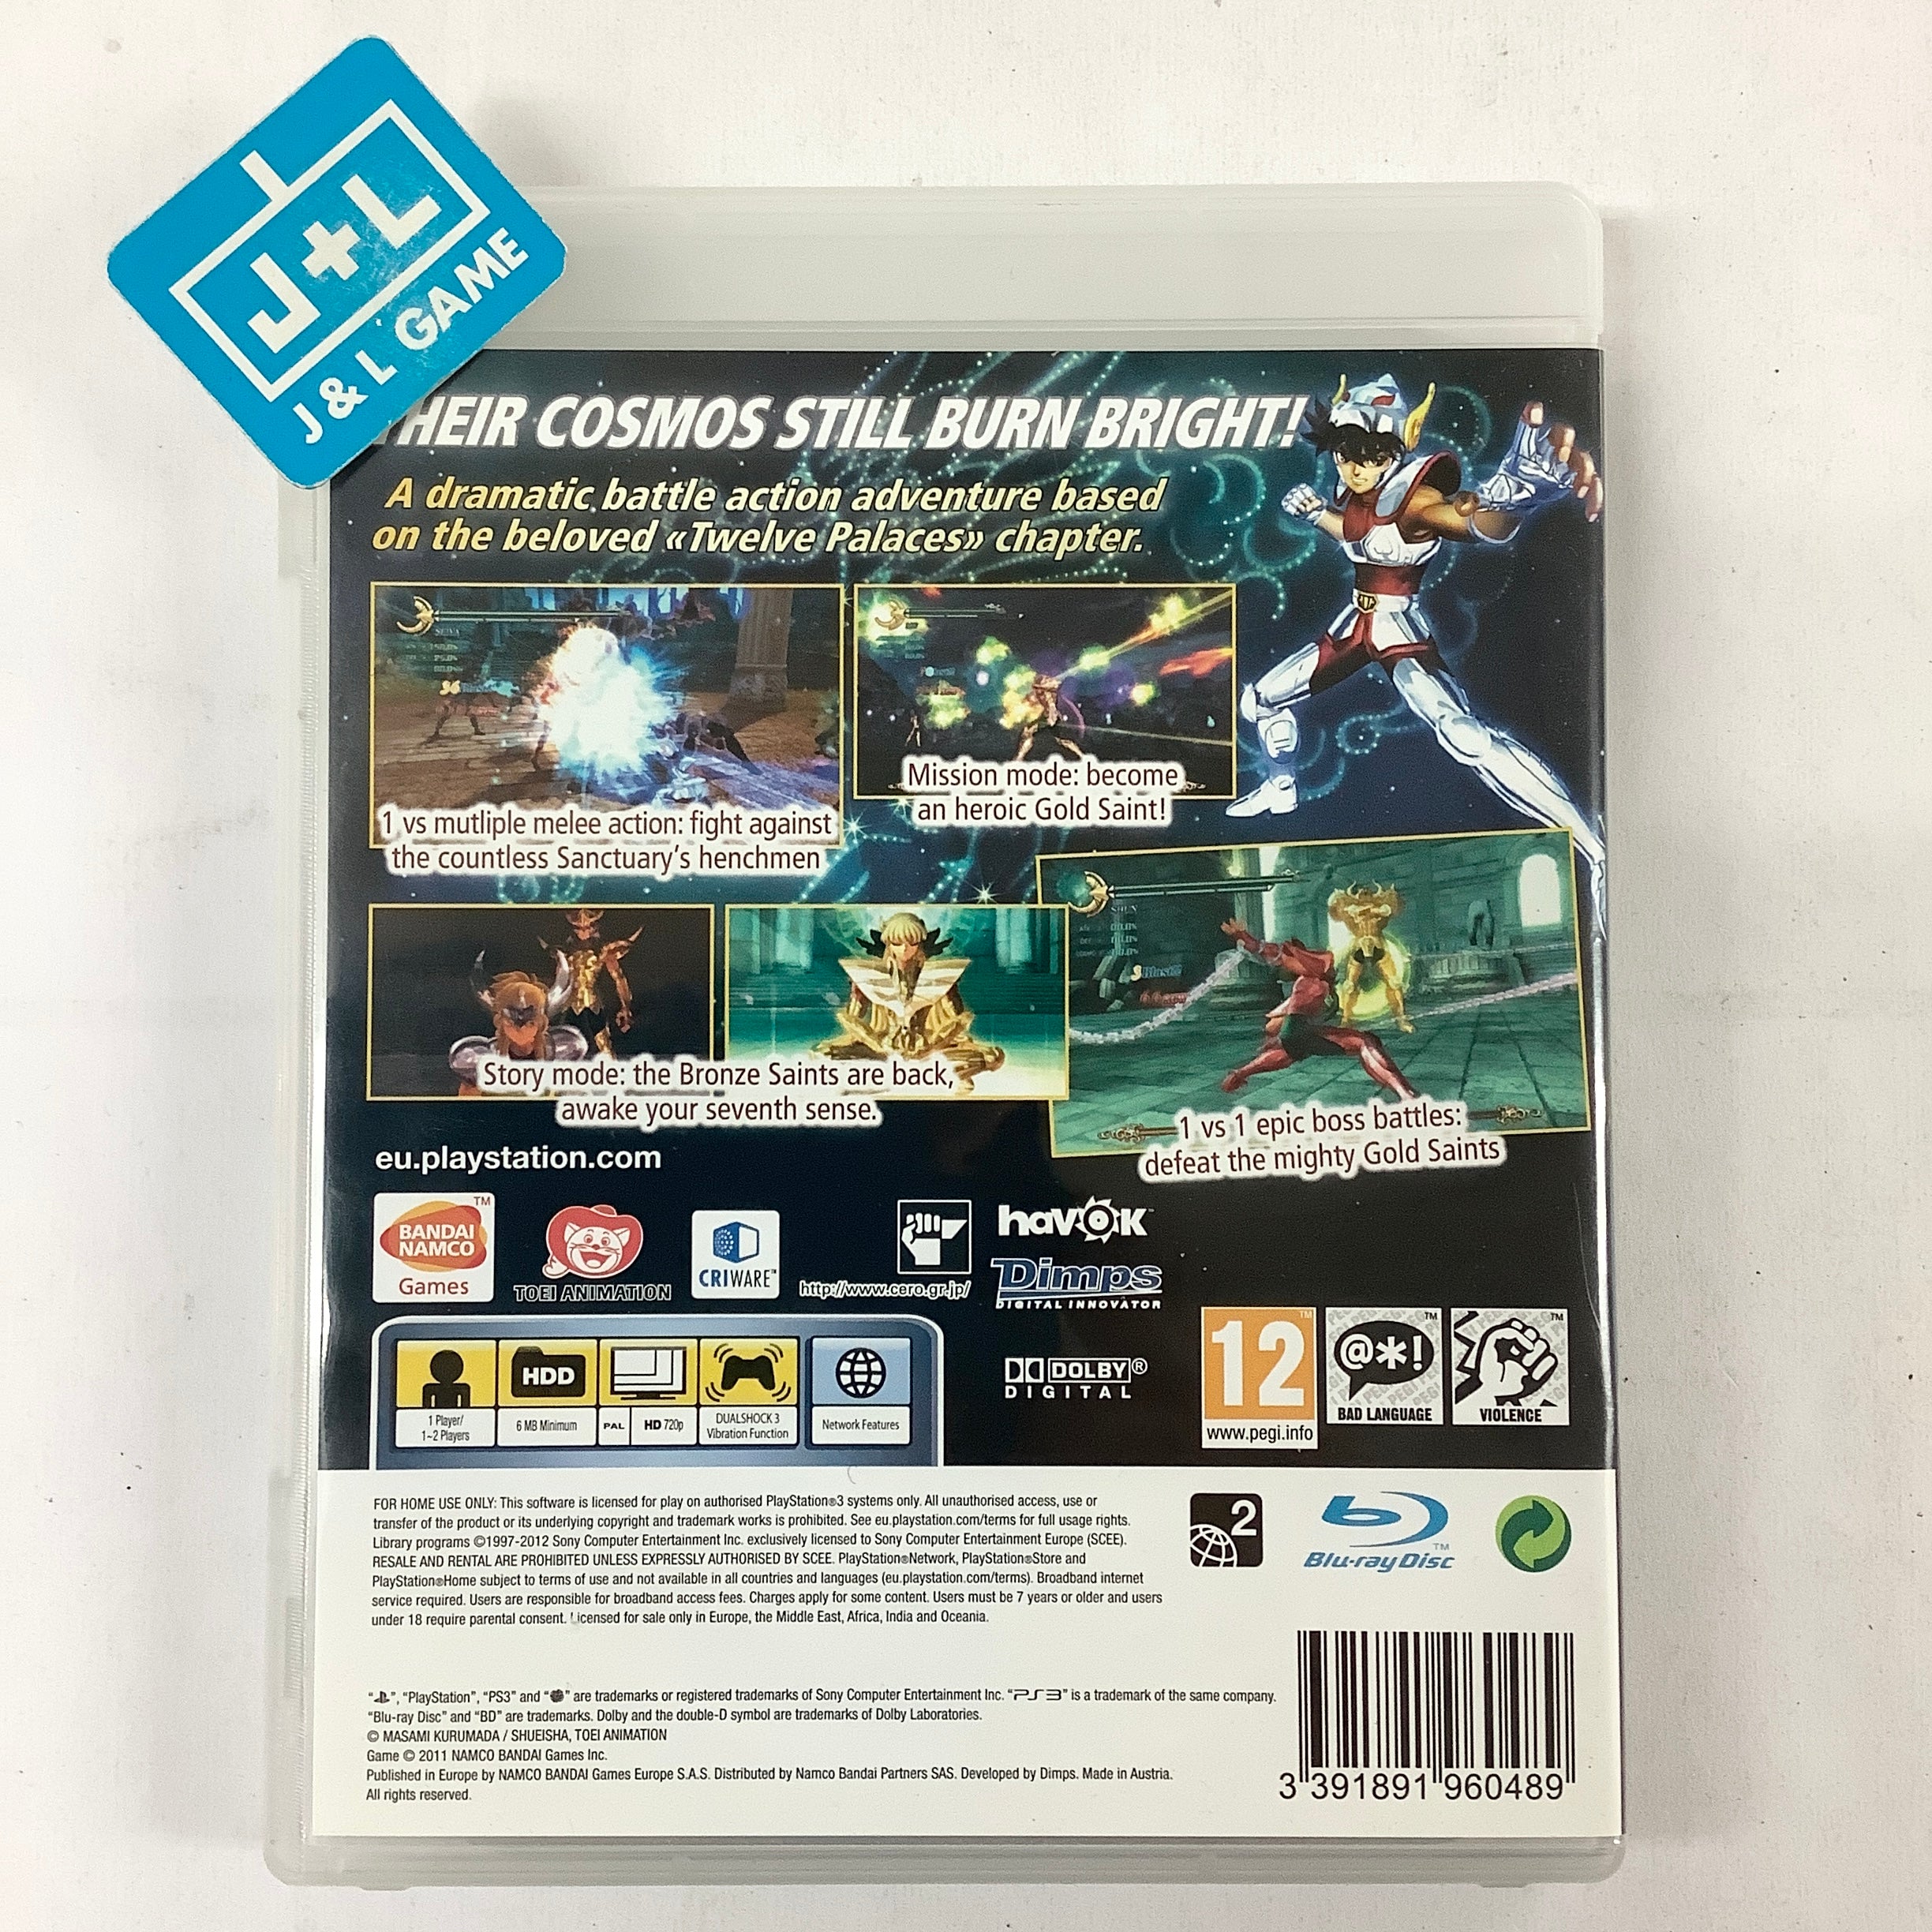 Saint Seiya: Sanctuary Battle - (PS3) PlayStation 3 [Pre-Owned] (European Import) Video Games Bandai Namco Games   